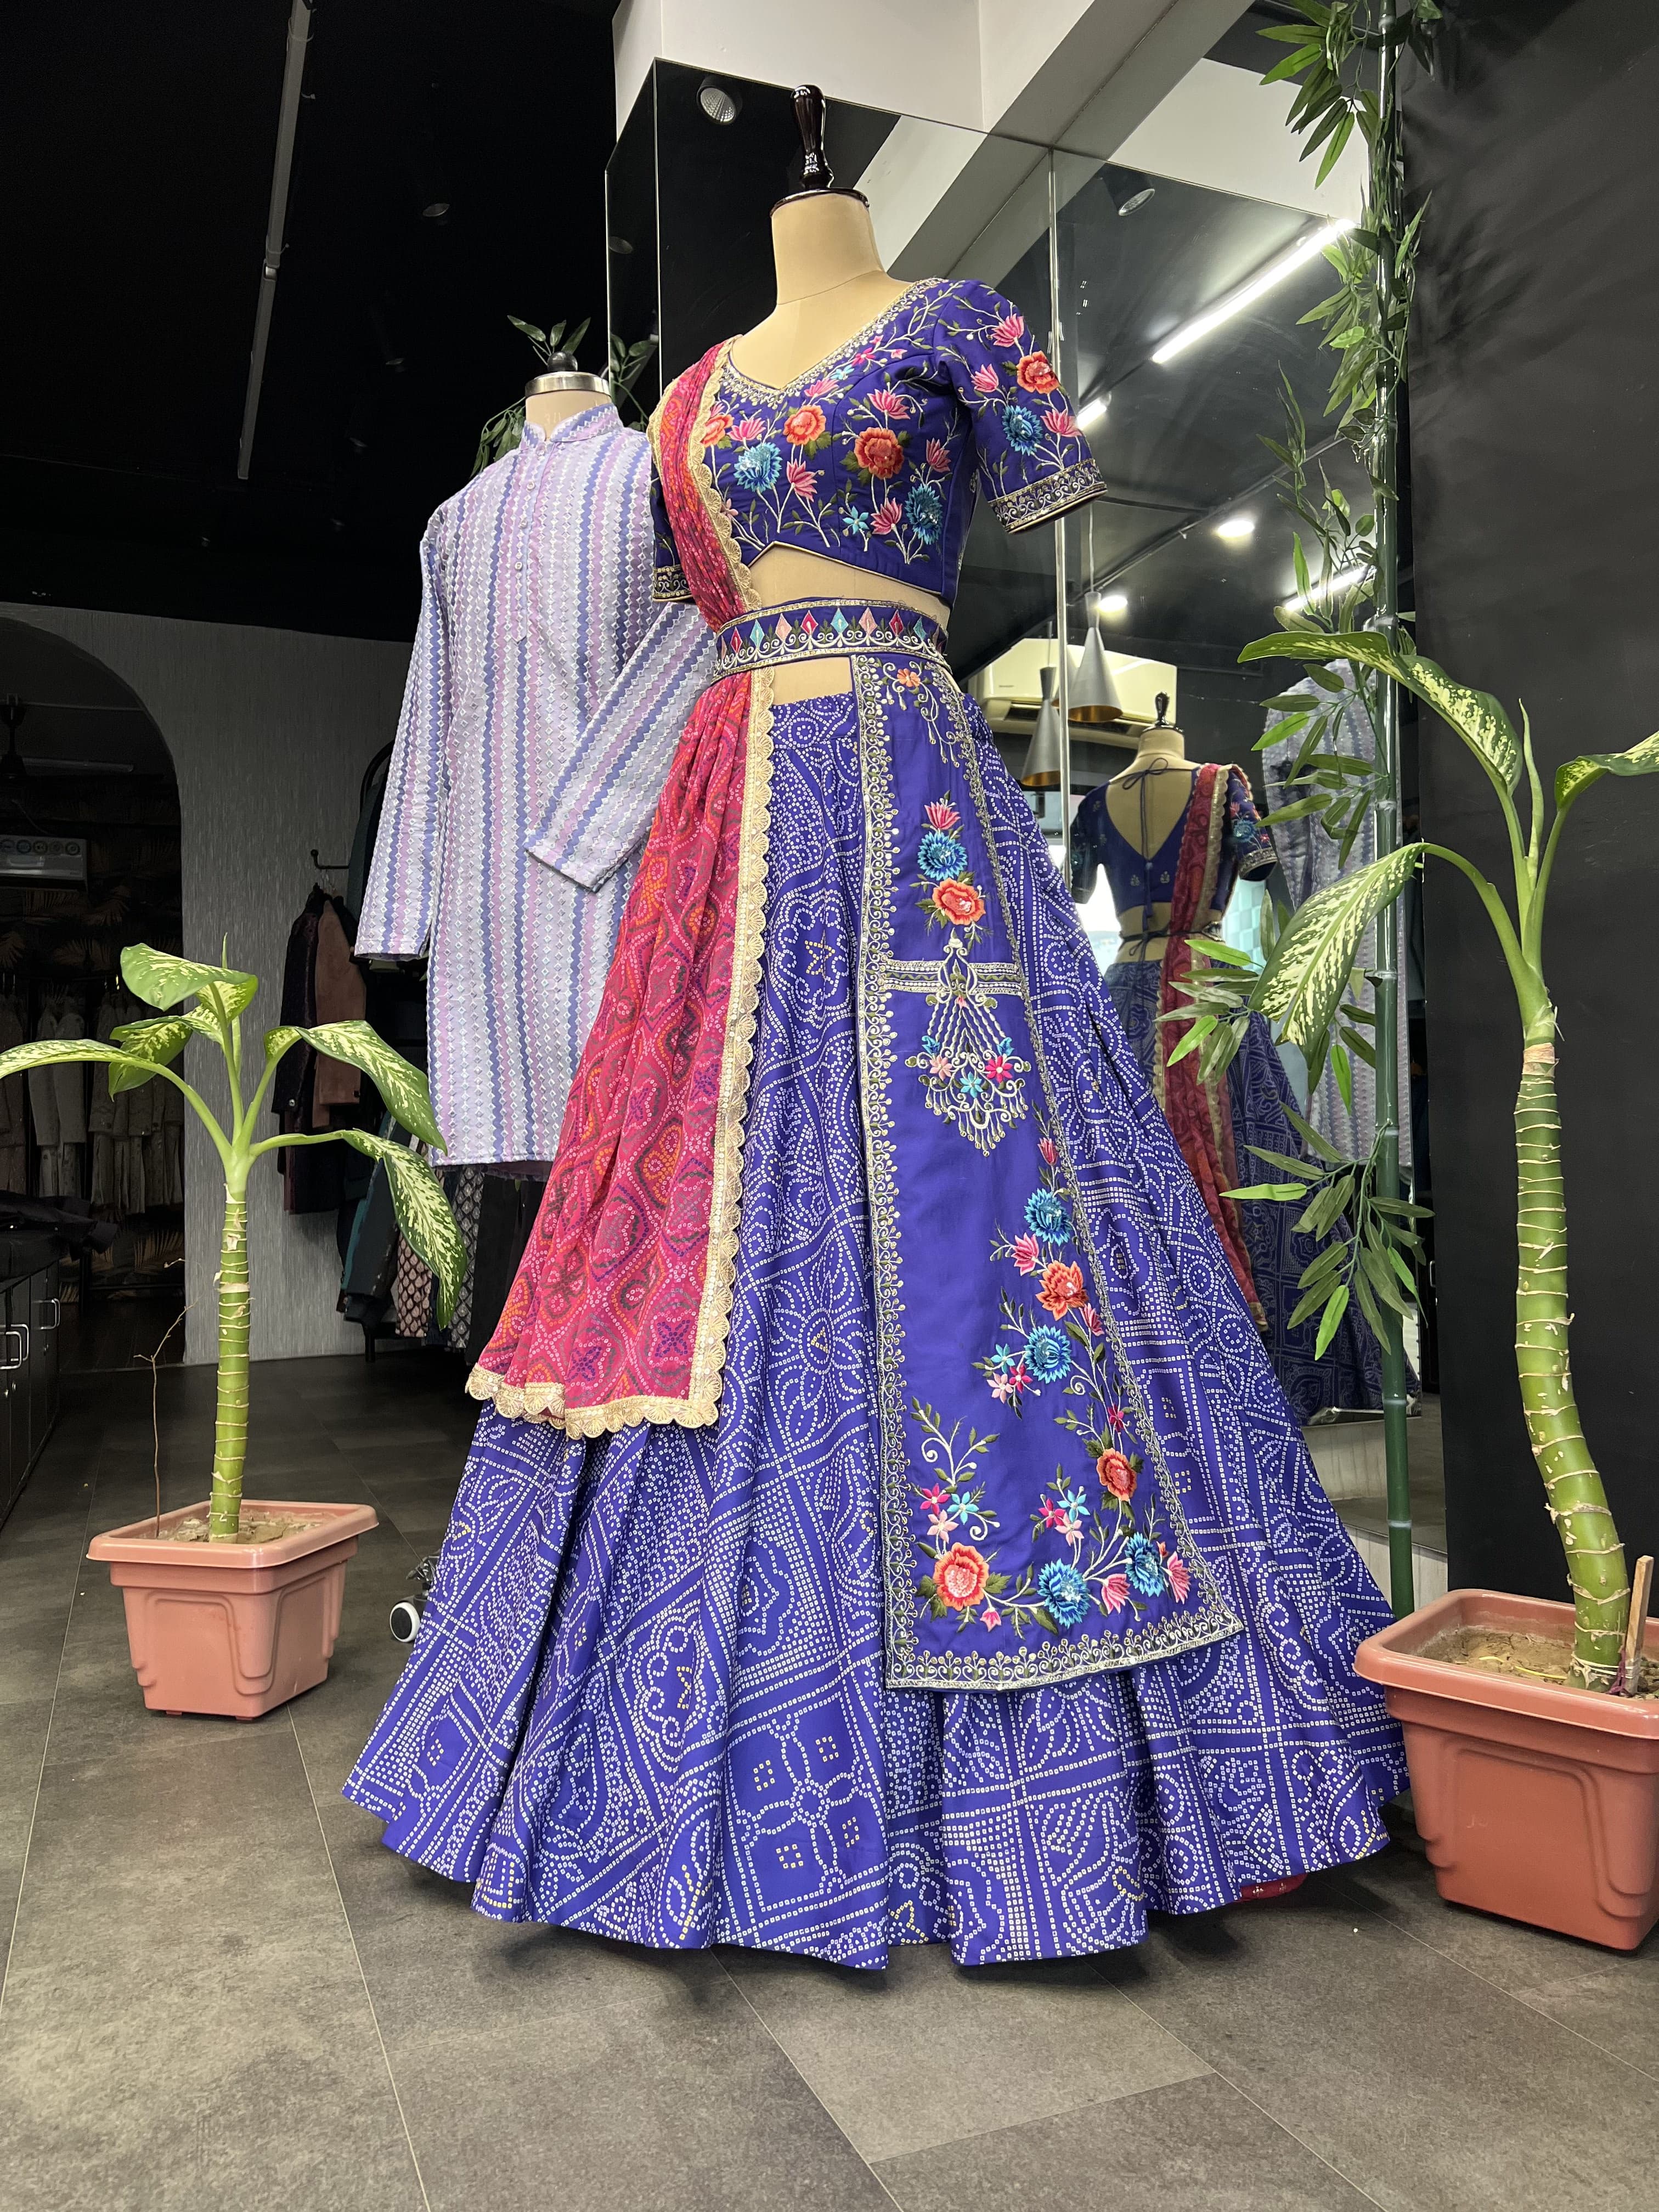 Bandhani Design Purple Color Stylish Lehenga Choli